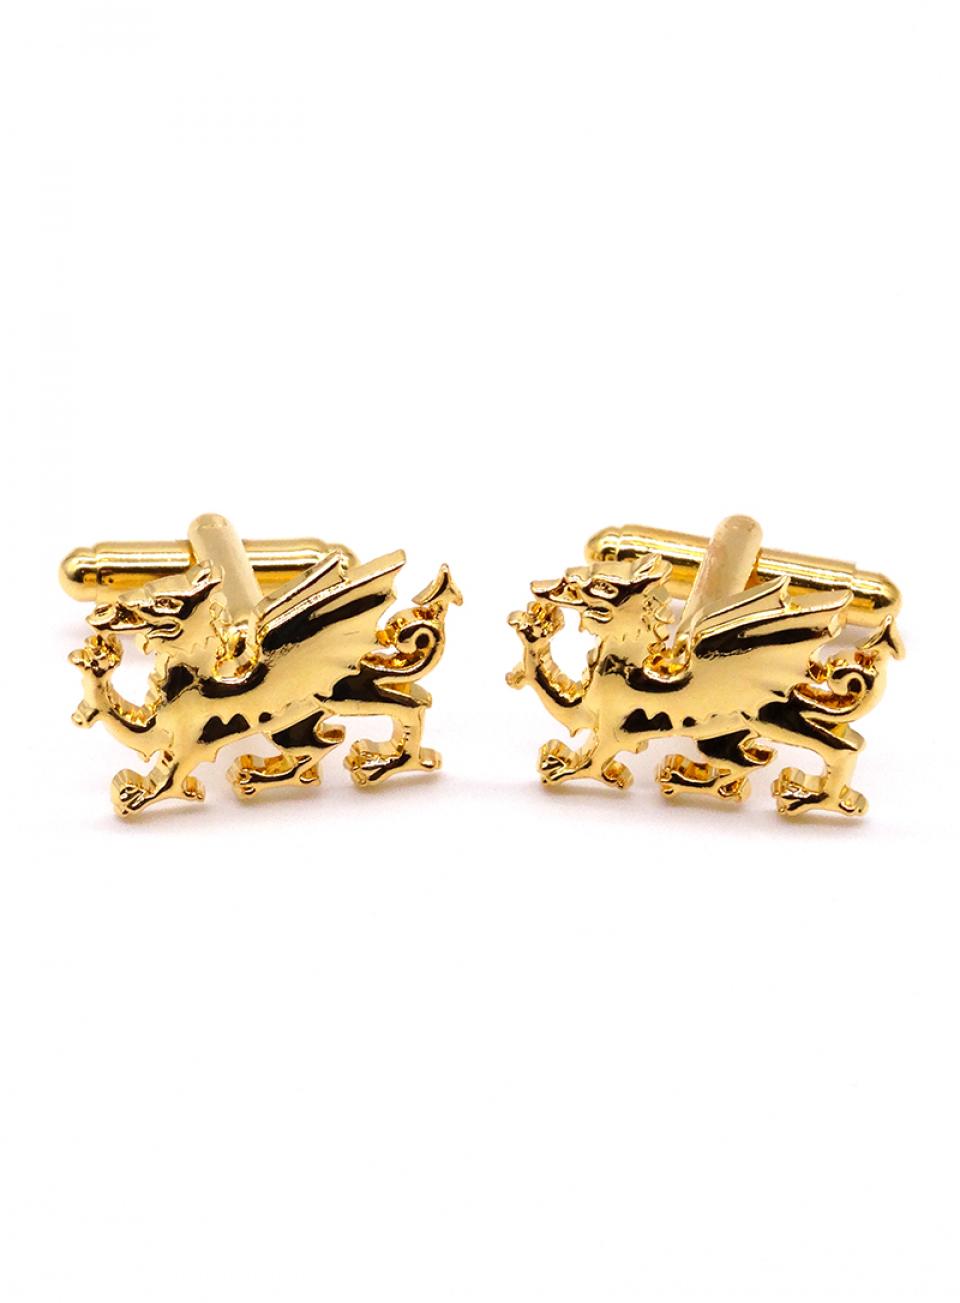 Gold Dragon Plated Cufflinks